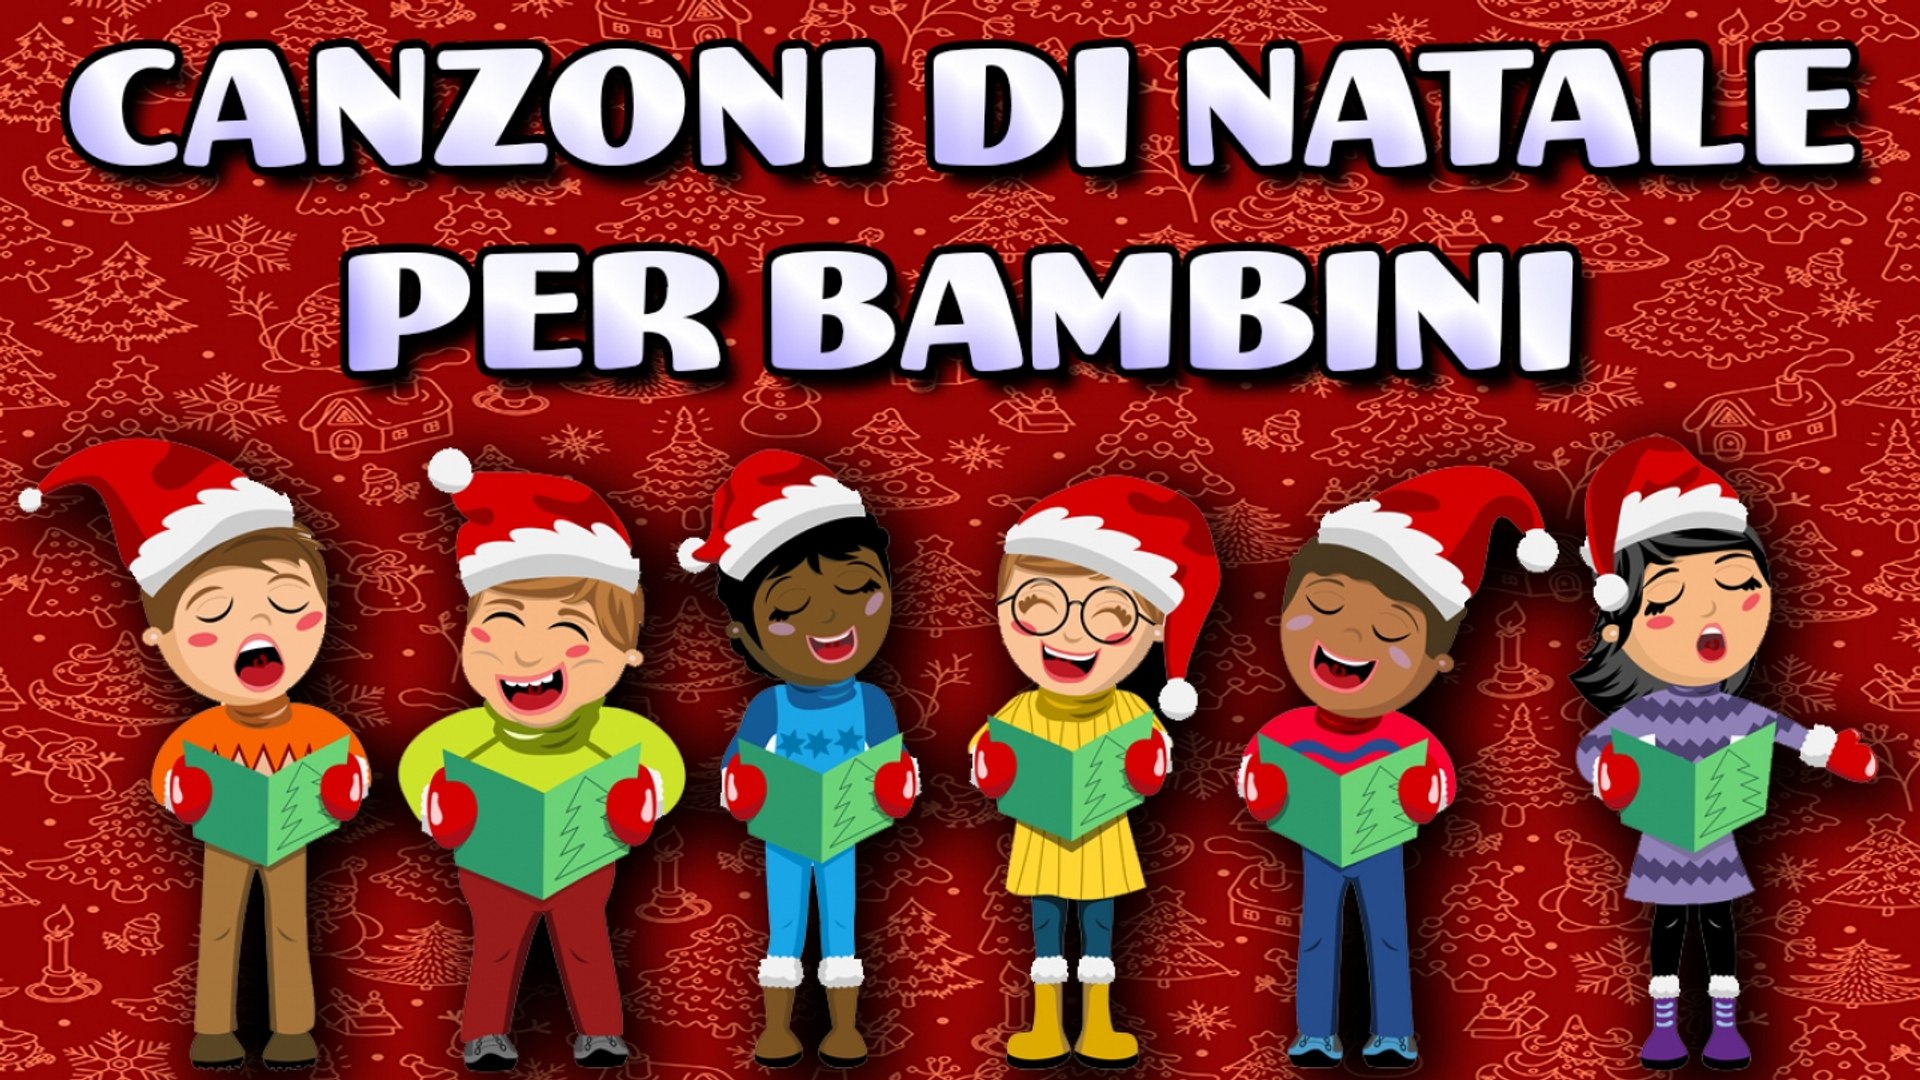 Canzoni Natale.Va Canzoni Di Natale Per Bambini 2019 Natalebambini Video Dailymotion